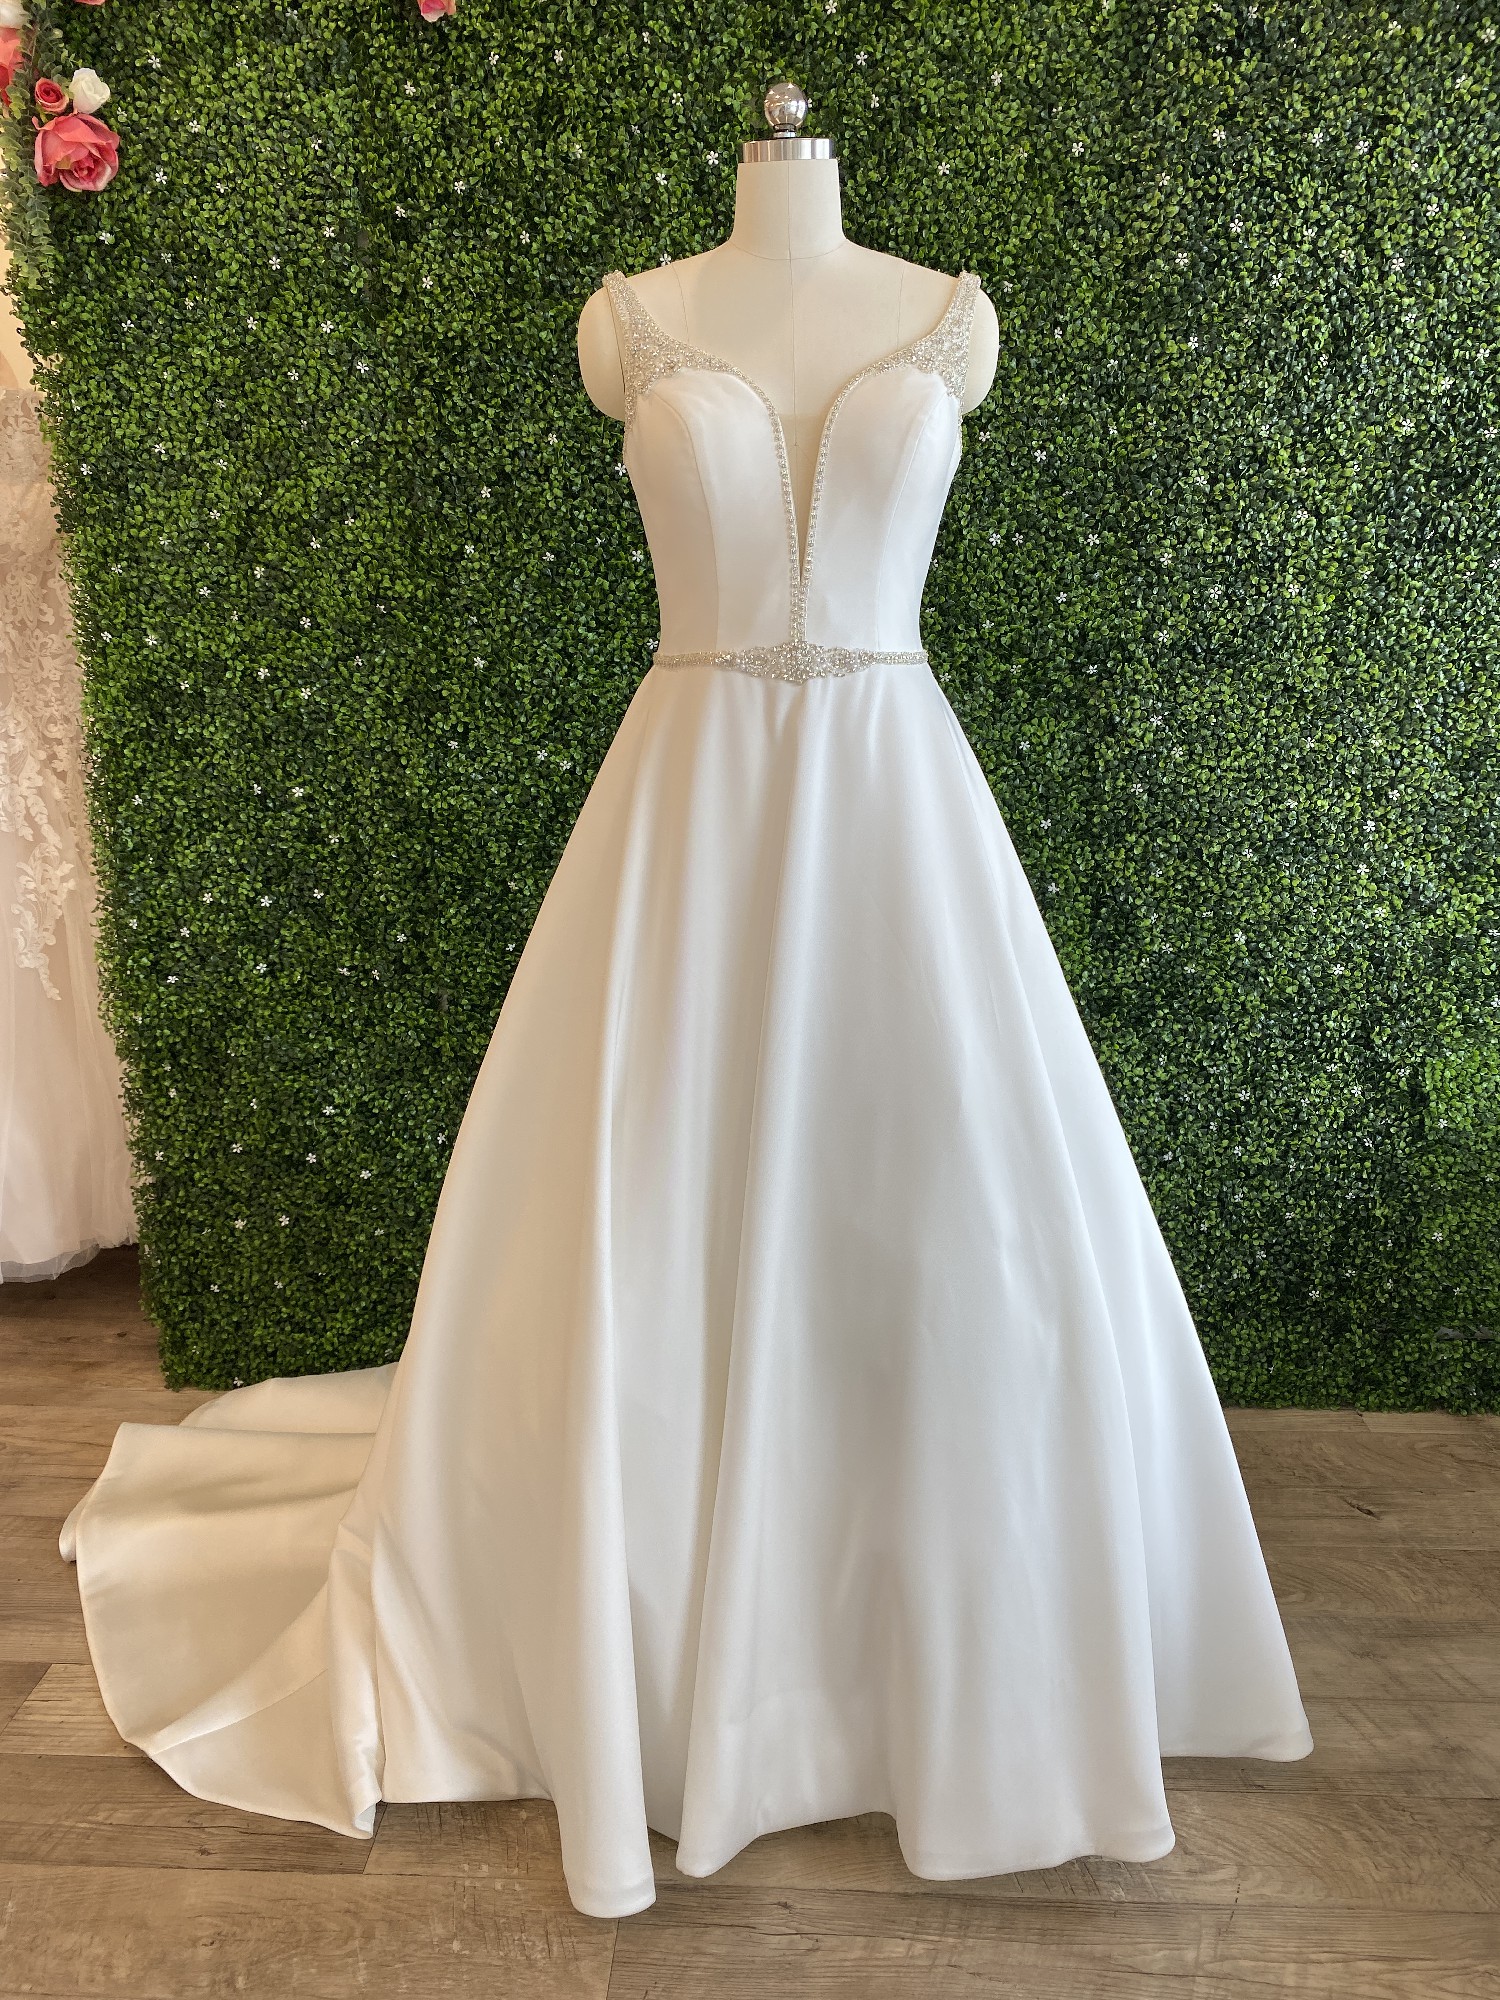 Stella York 6782 Sample Wedding Dress Save 77% - Stillwhite